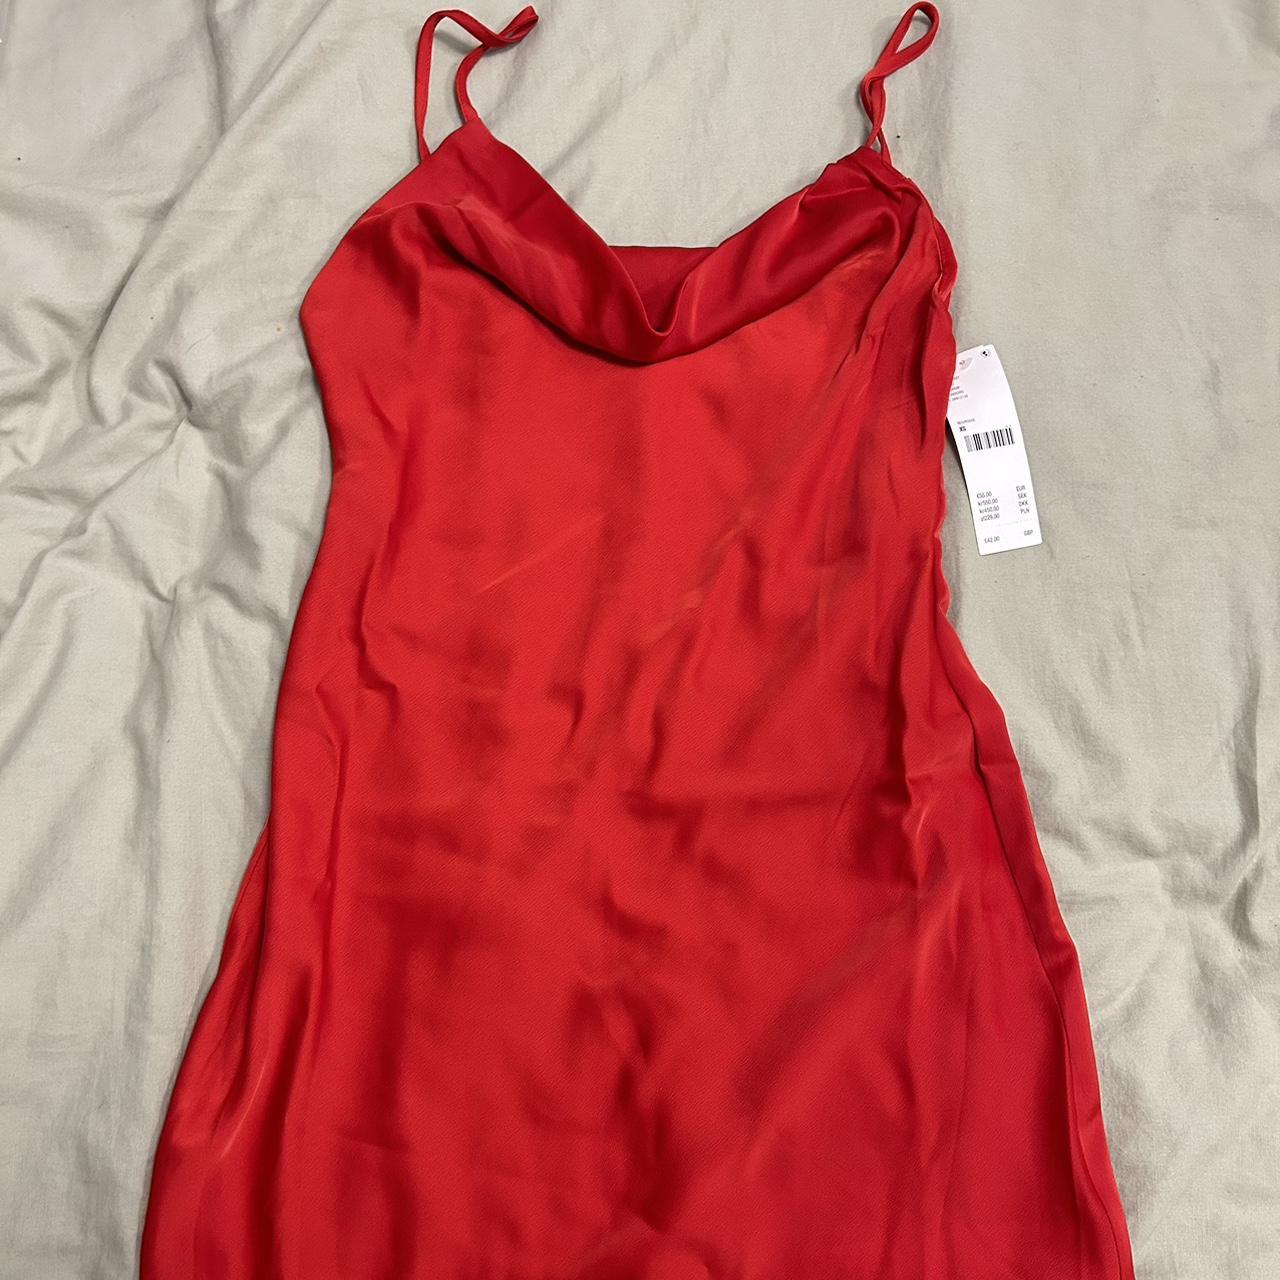 Urban Outfitters Women's Red Dress | Depop